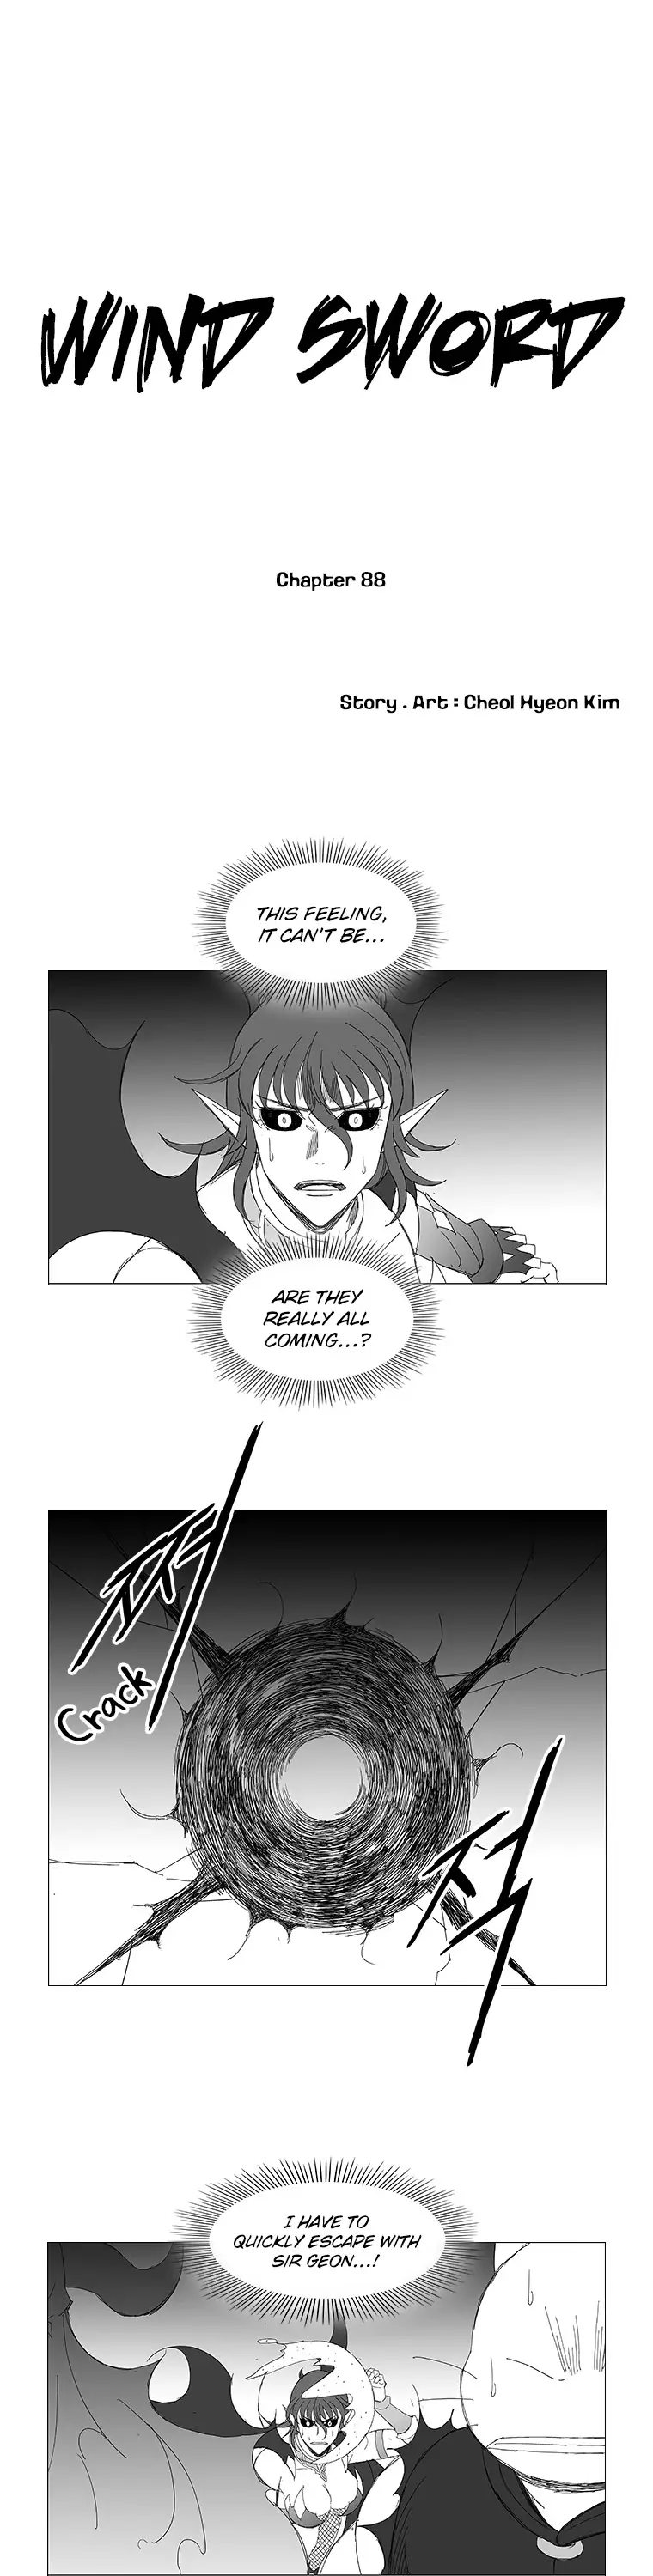 Wind Sword - 88 page 2